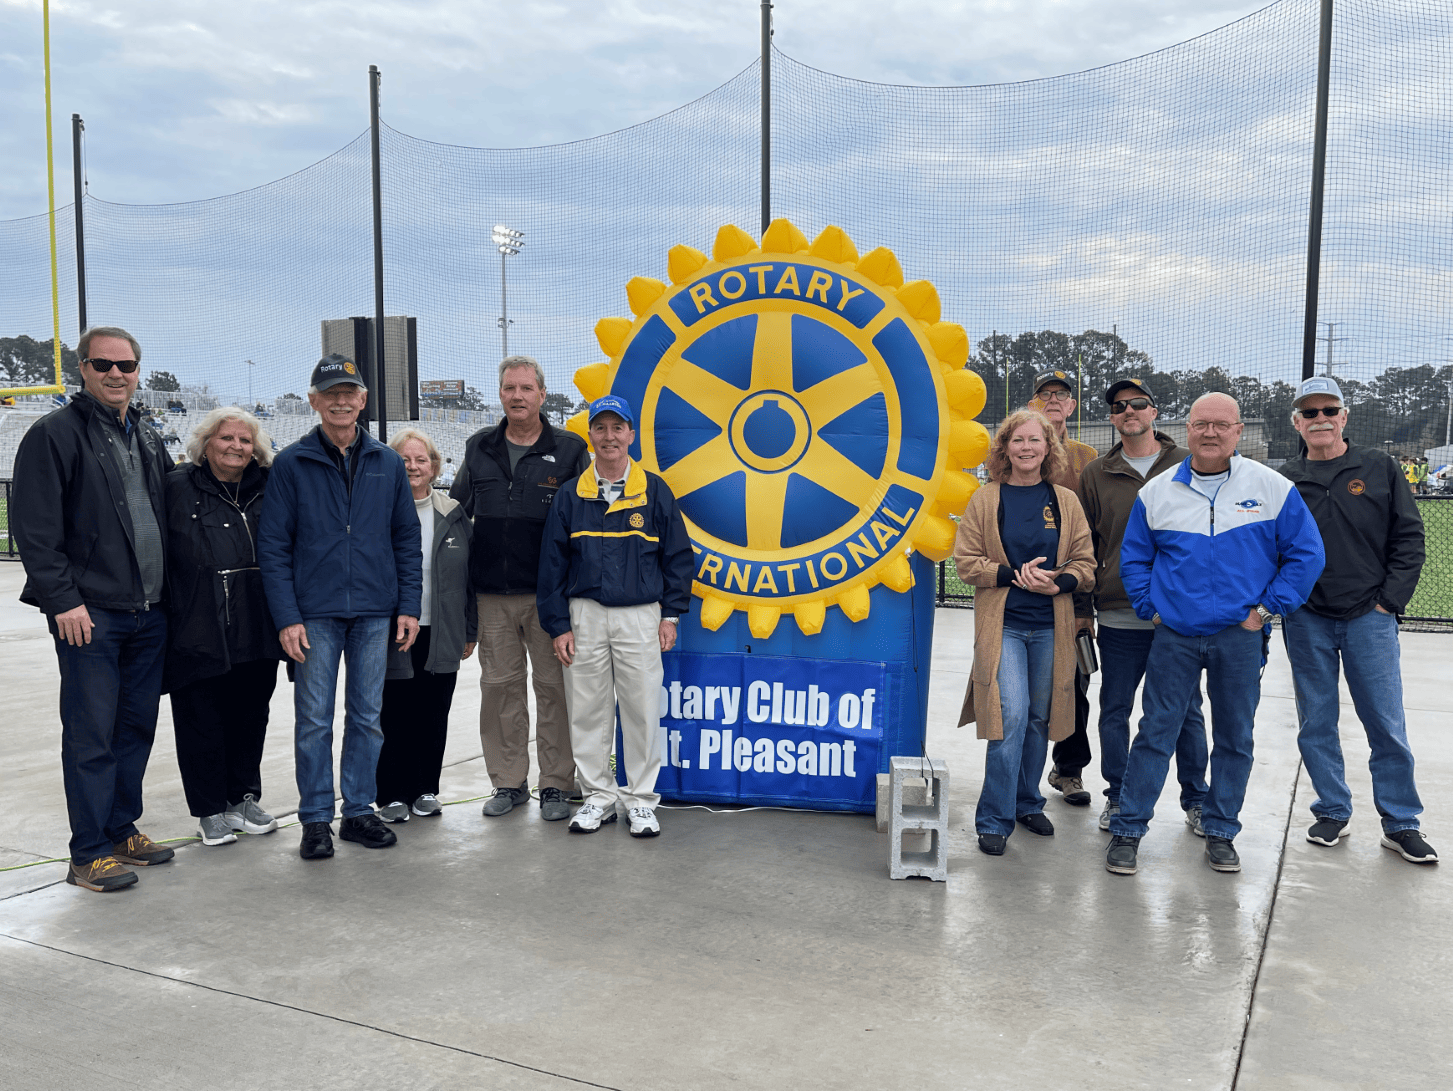   Mt. Pleasant Rotary Club    Create Hope in the World.  